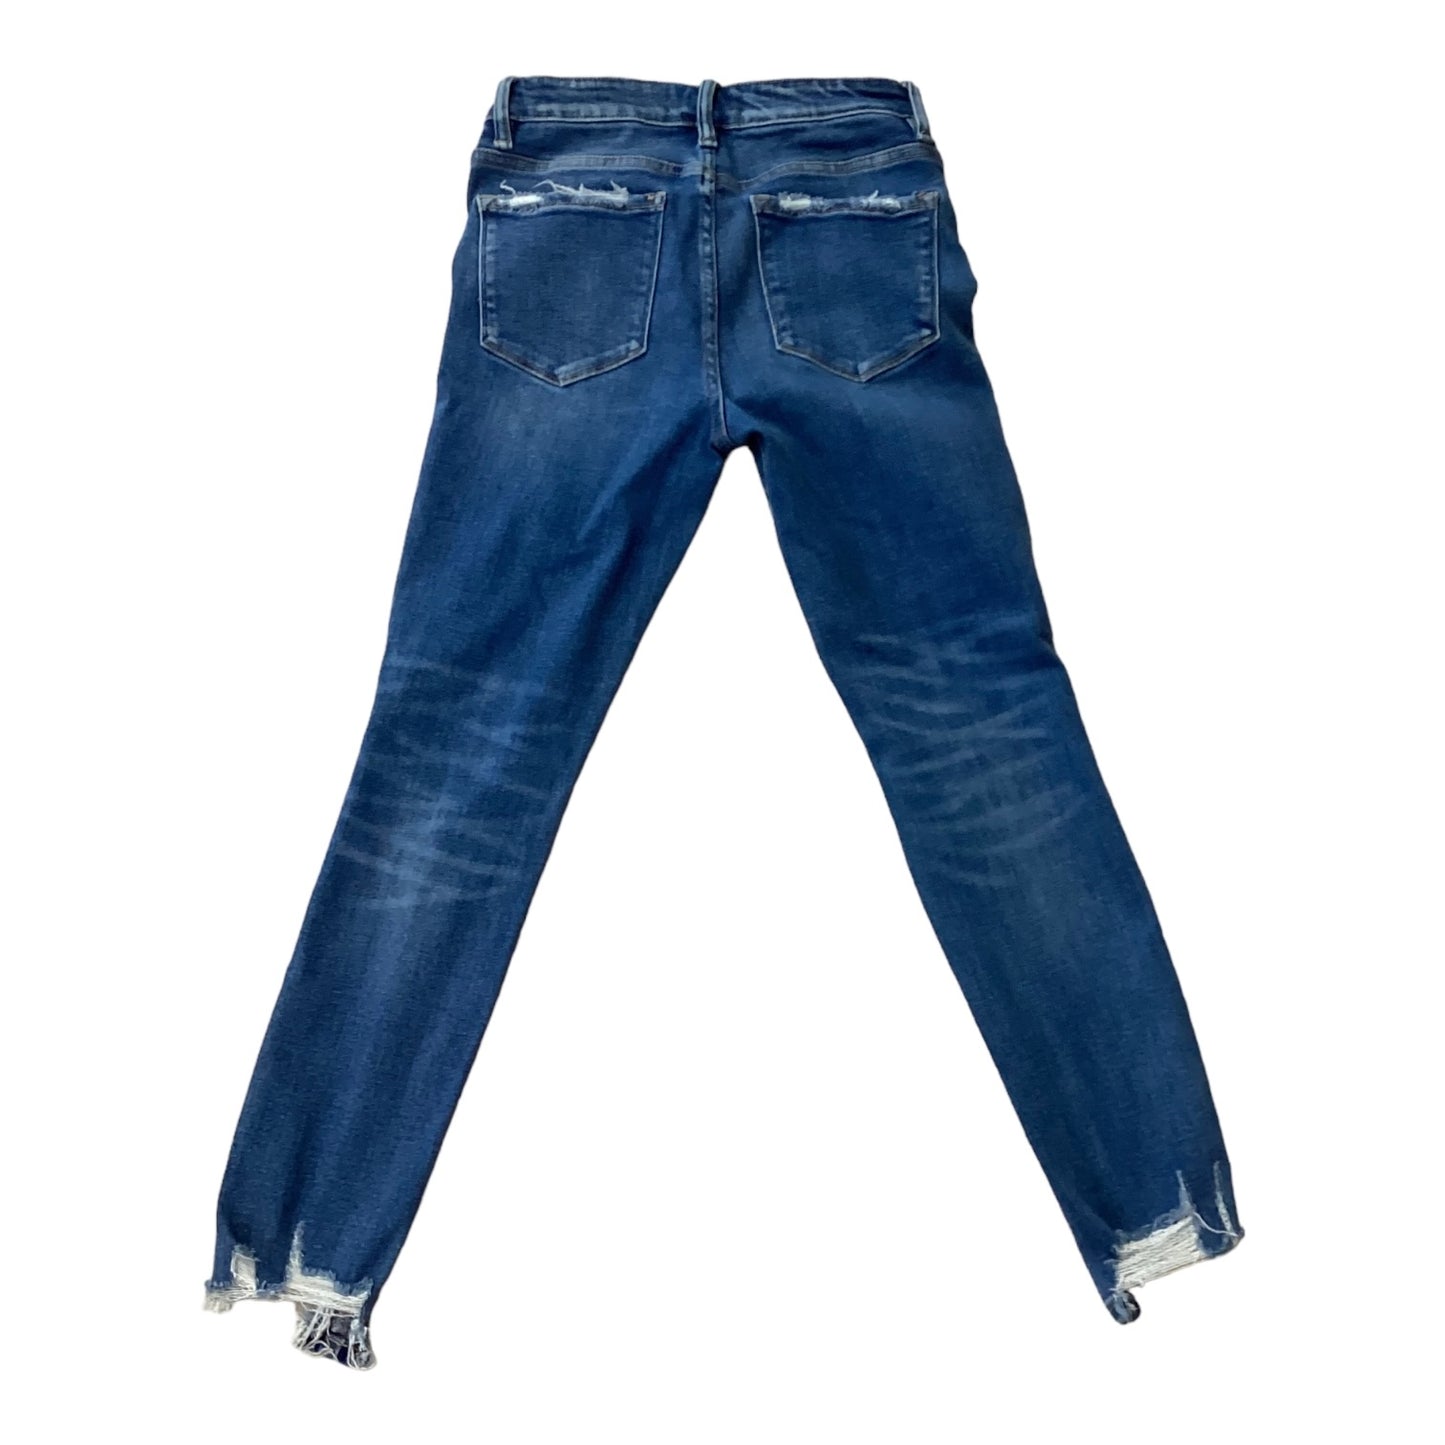 Jeans Skinny By Vervet  Size: 2